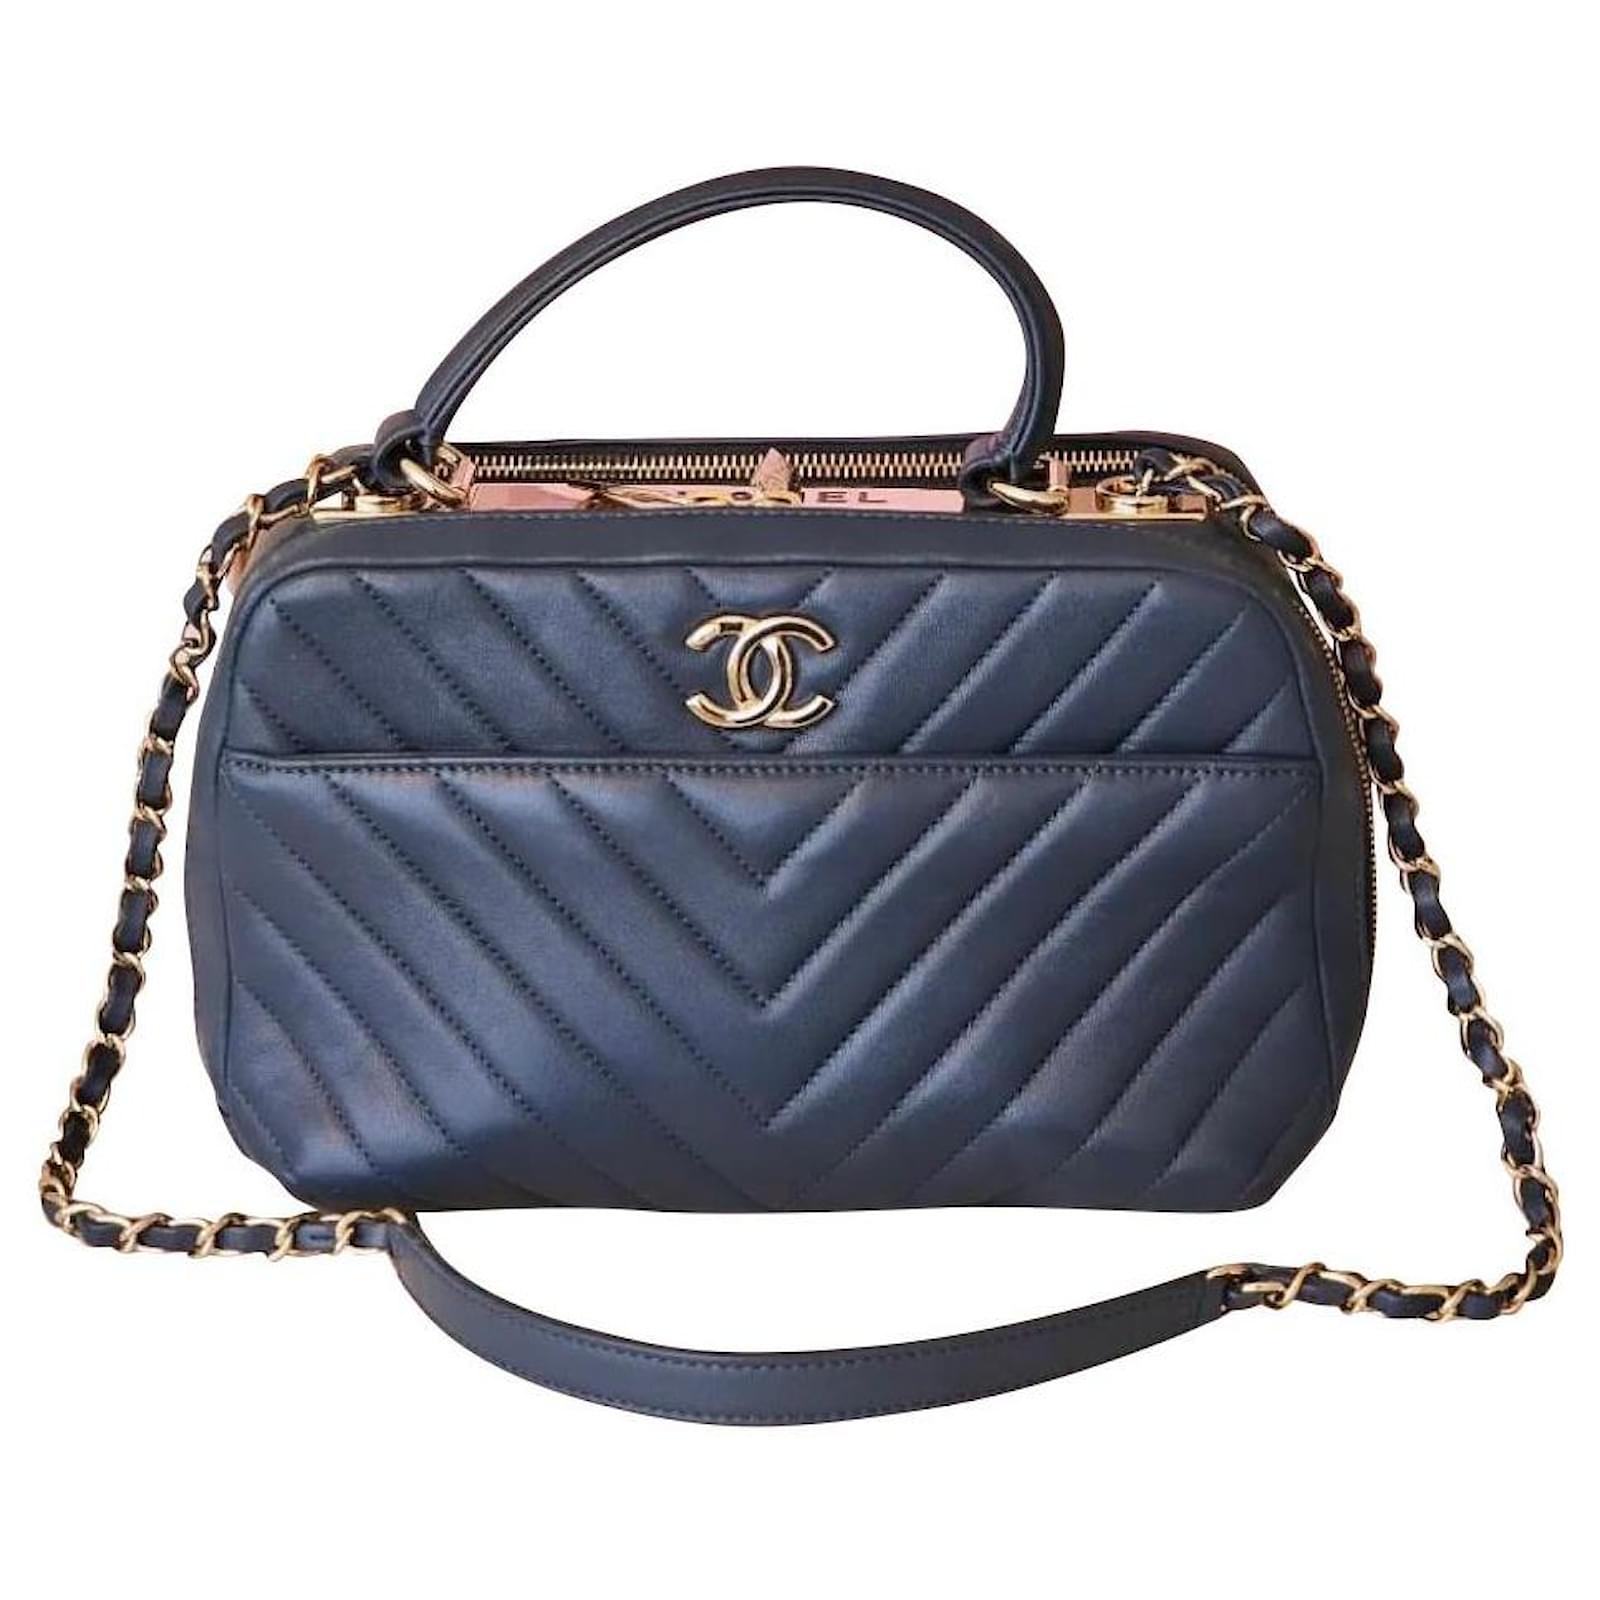 Chanel 2019 Medium Chevron Trendy CC bowling bag in Navy Blue with